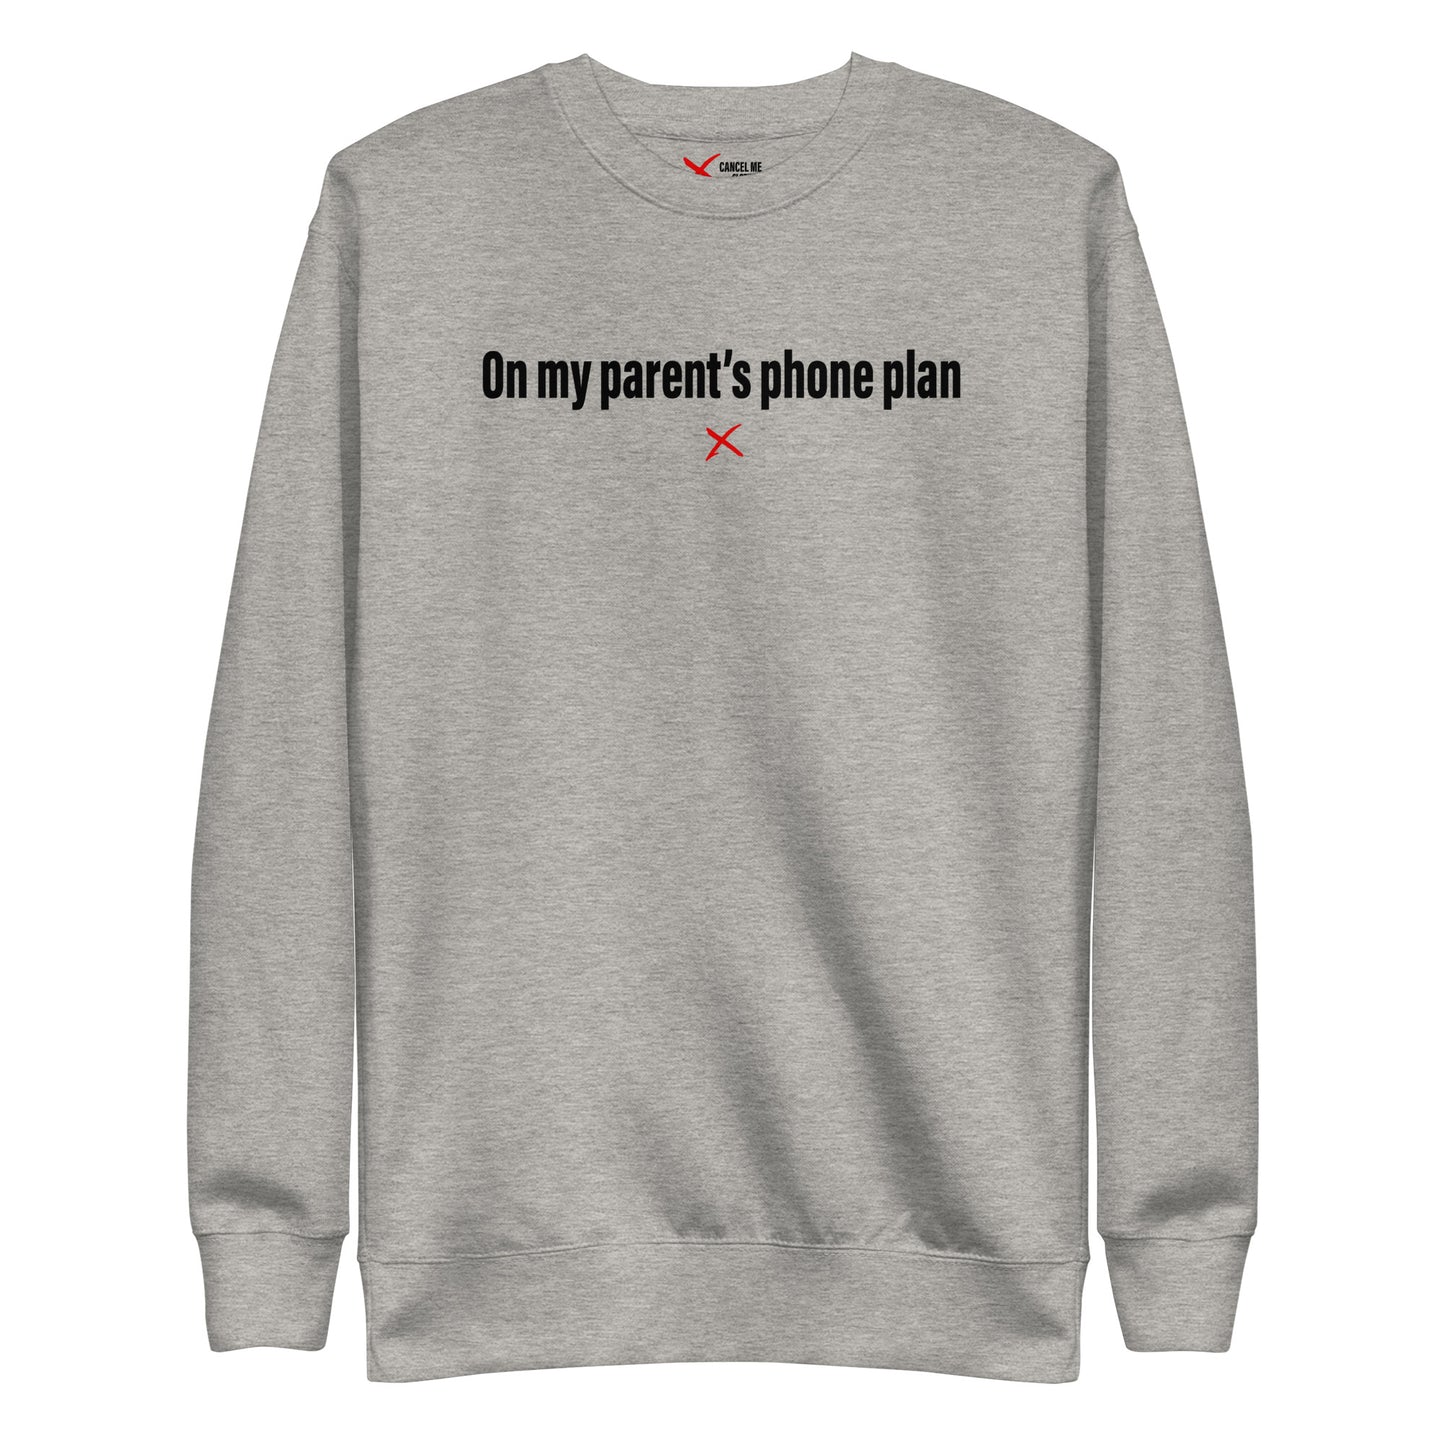 On my parent's phone plan - Sweatshirt